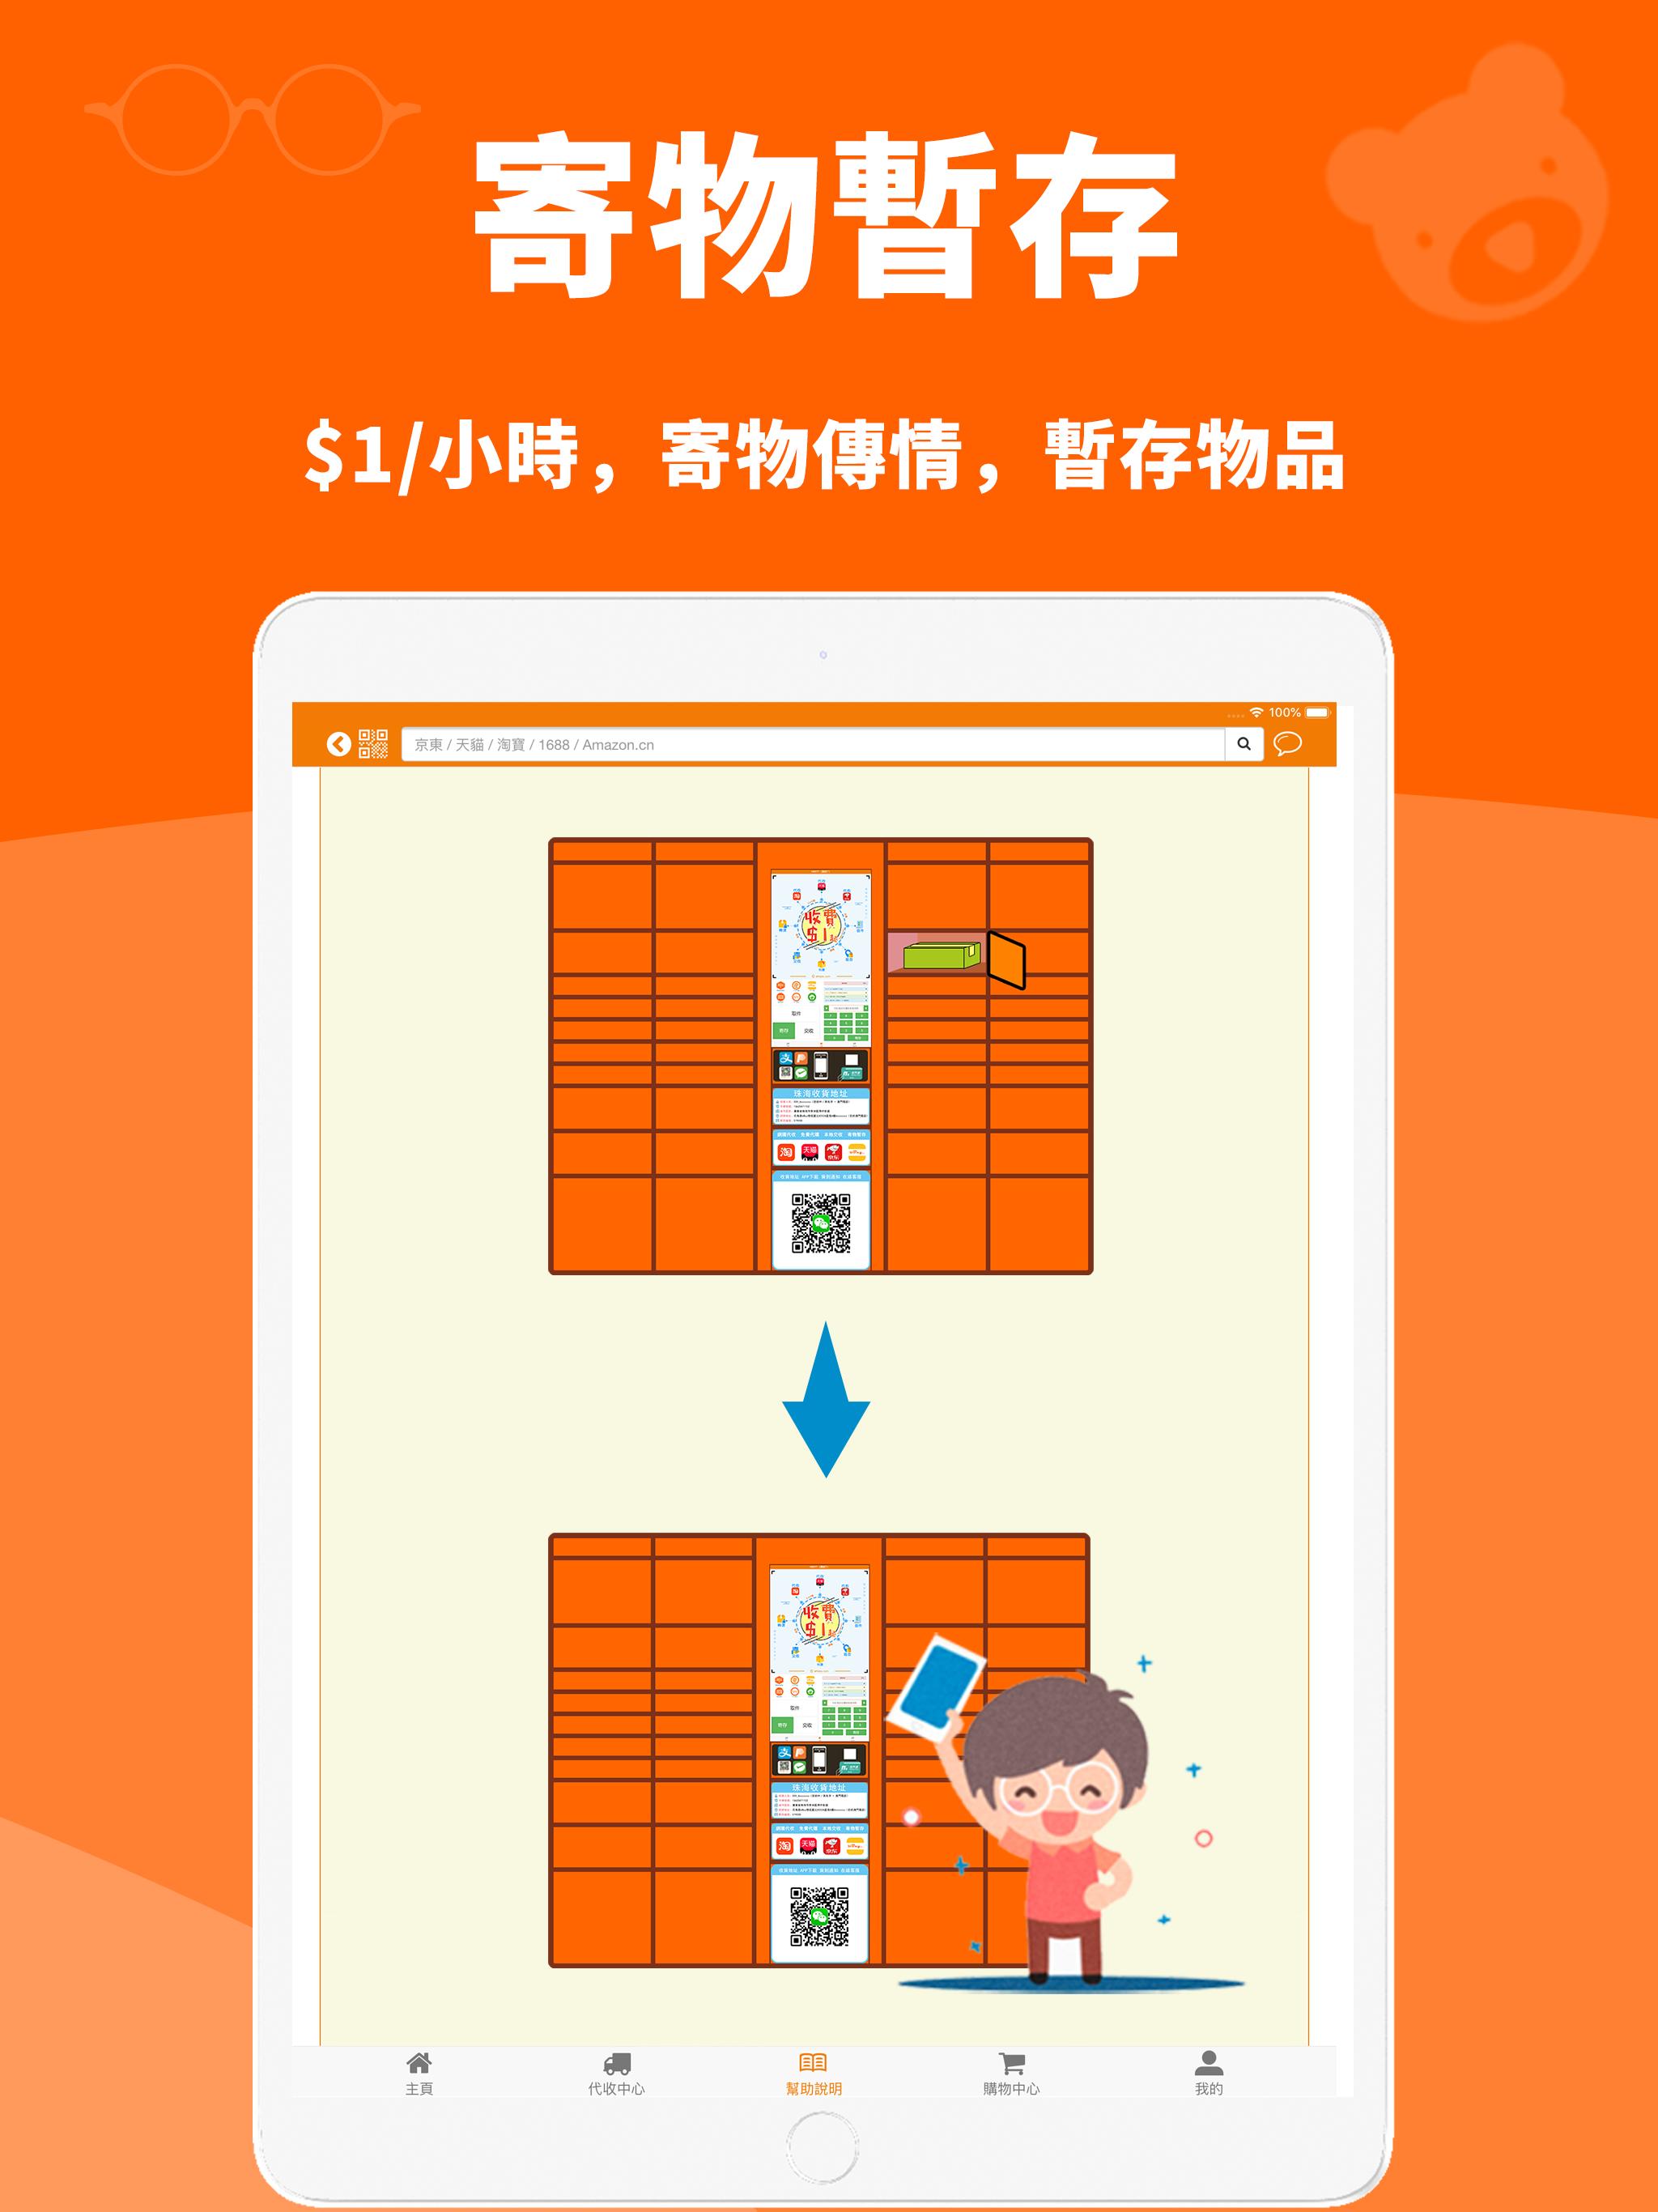 eBuy.mo 澳門易購網 2.1.4 Screenshot 21